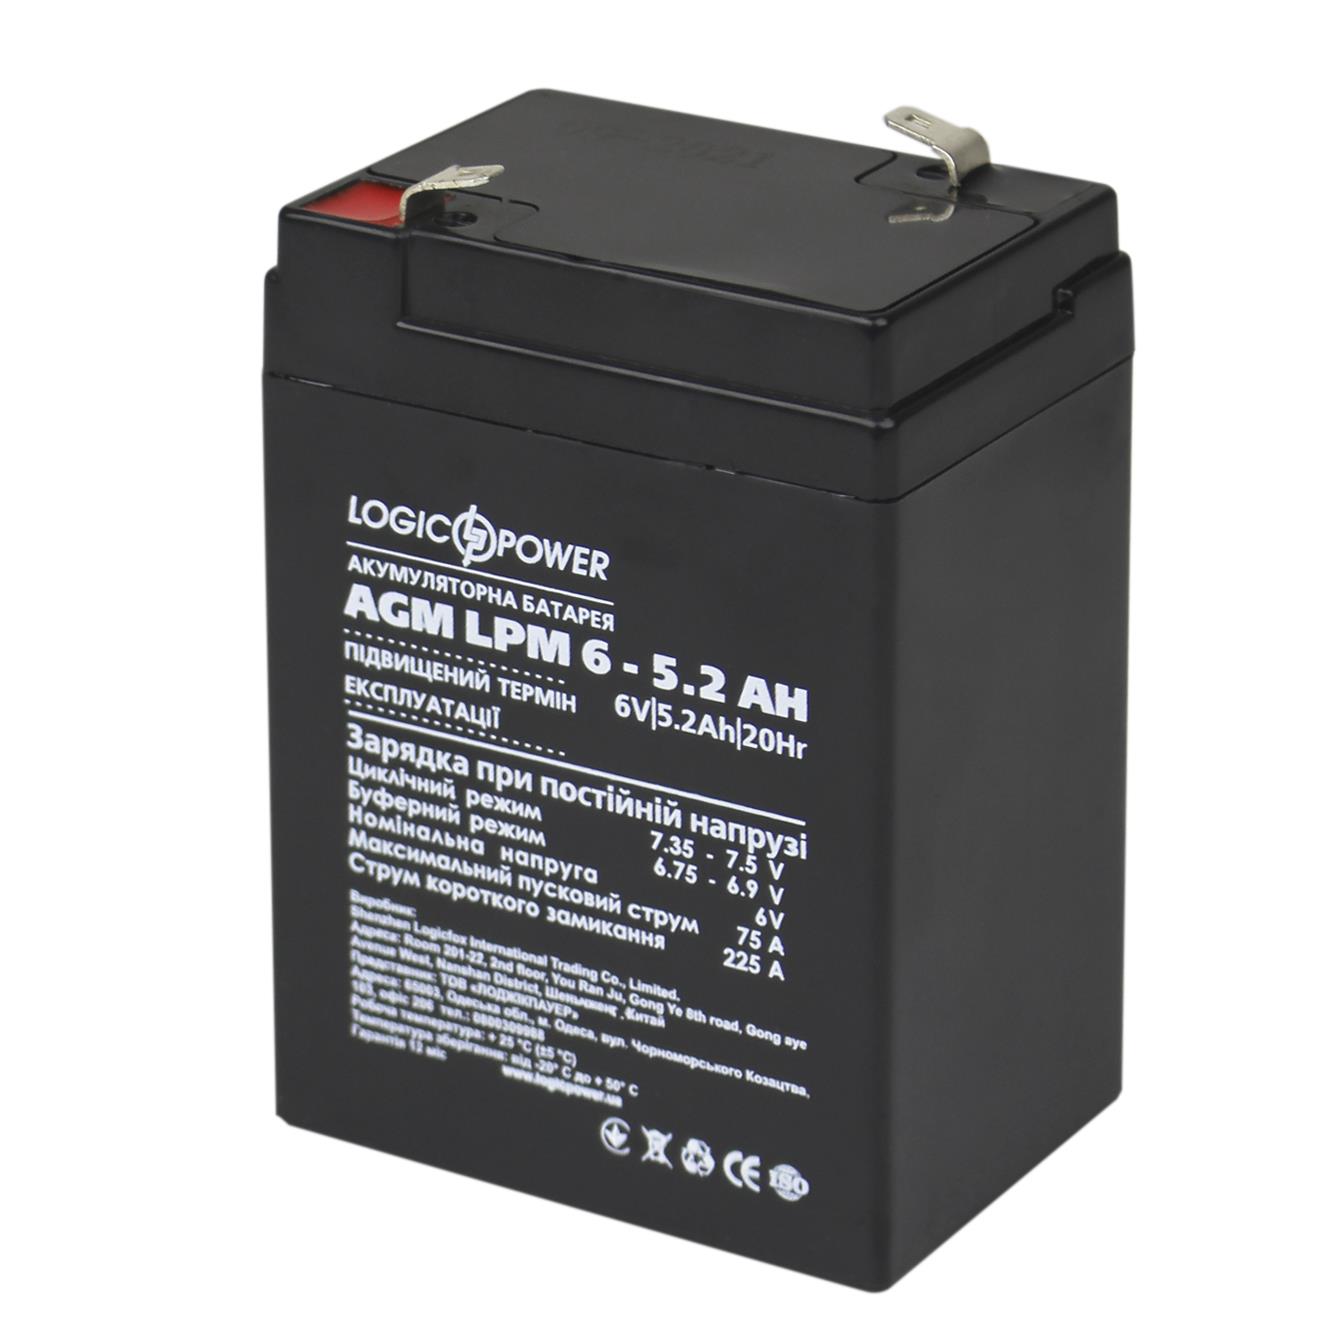 Аккумулятор 6 В LogicPower AGM LPM 6V - 5.2 Ah (4158)